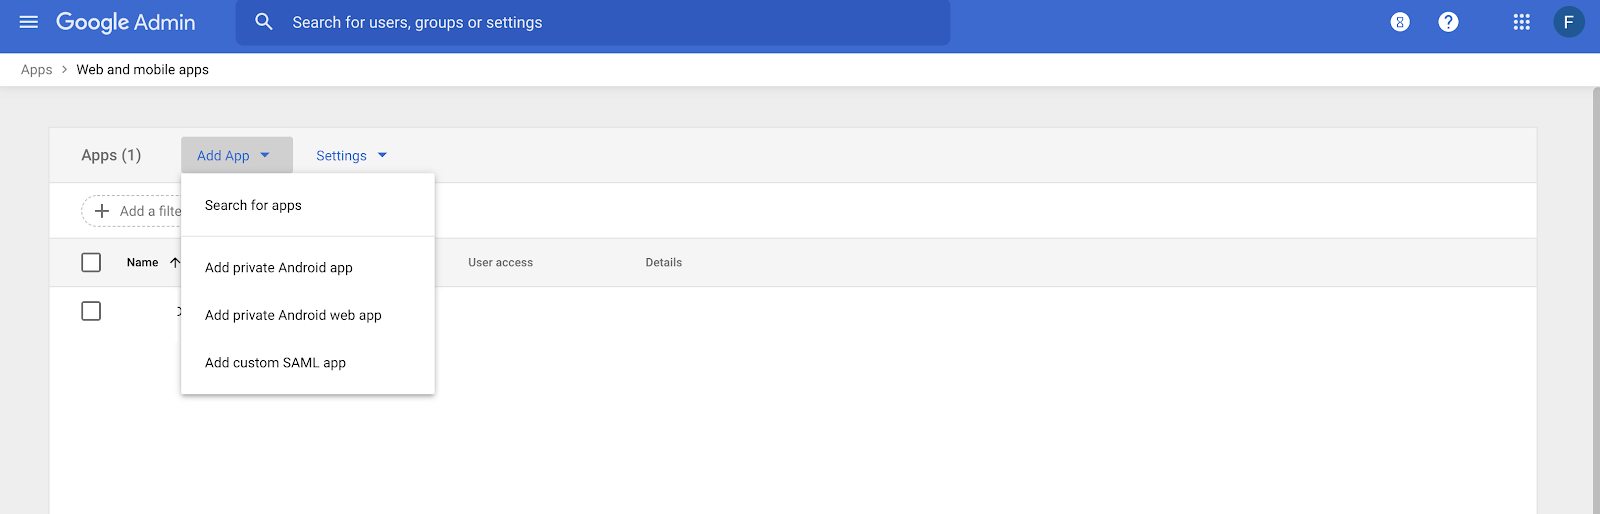 Google Admin Add Custom SAML App